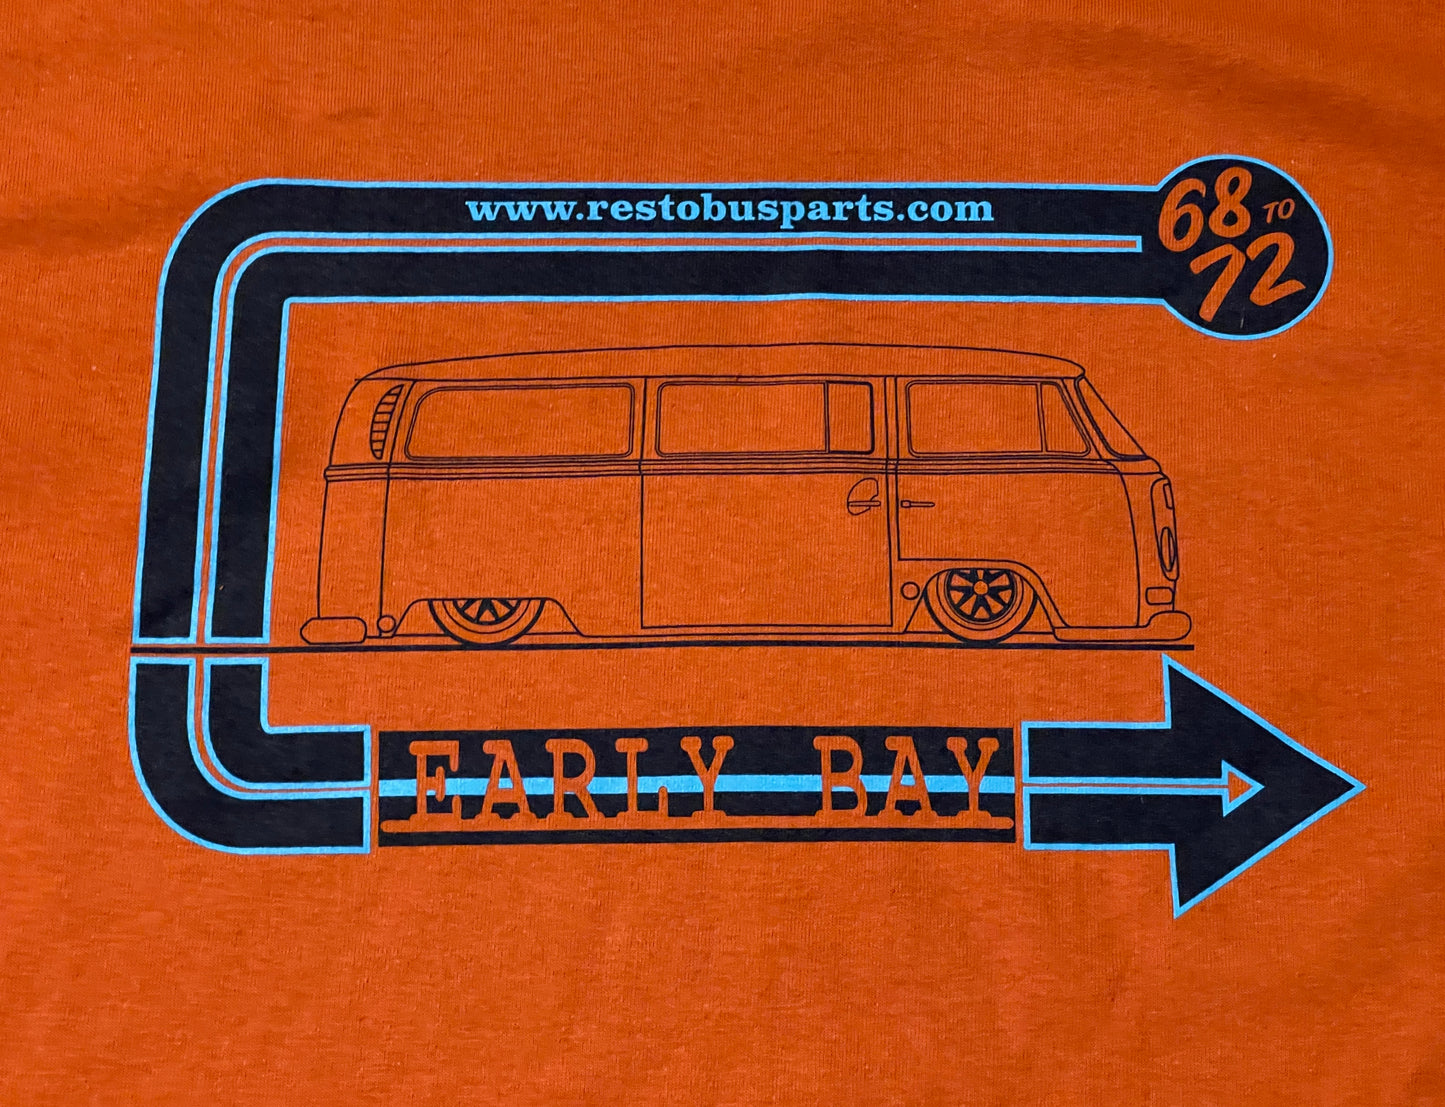 Earlybay t-shirt - Texas Orange